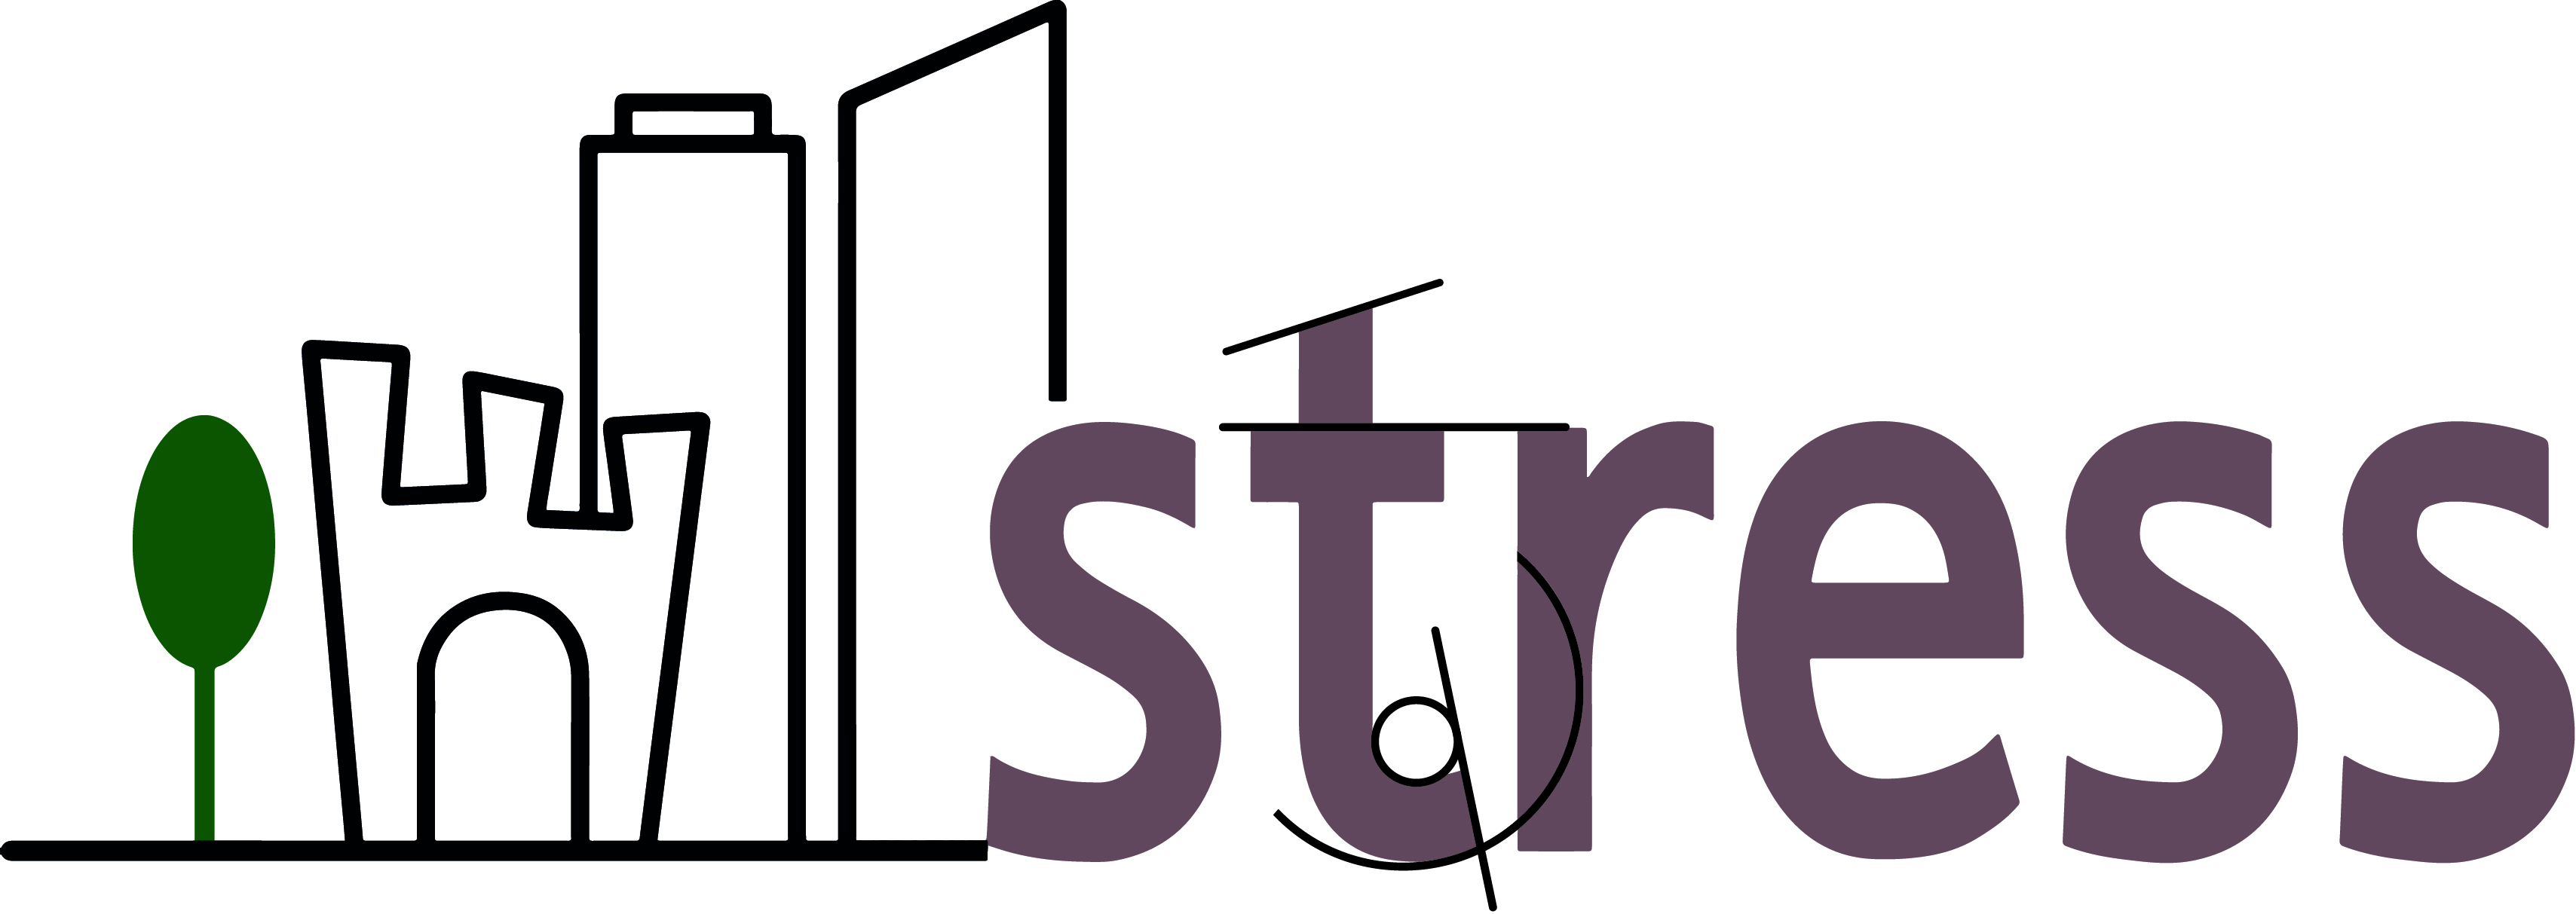 Logo Vettoriale Stress